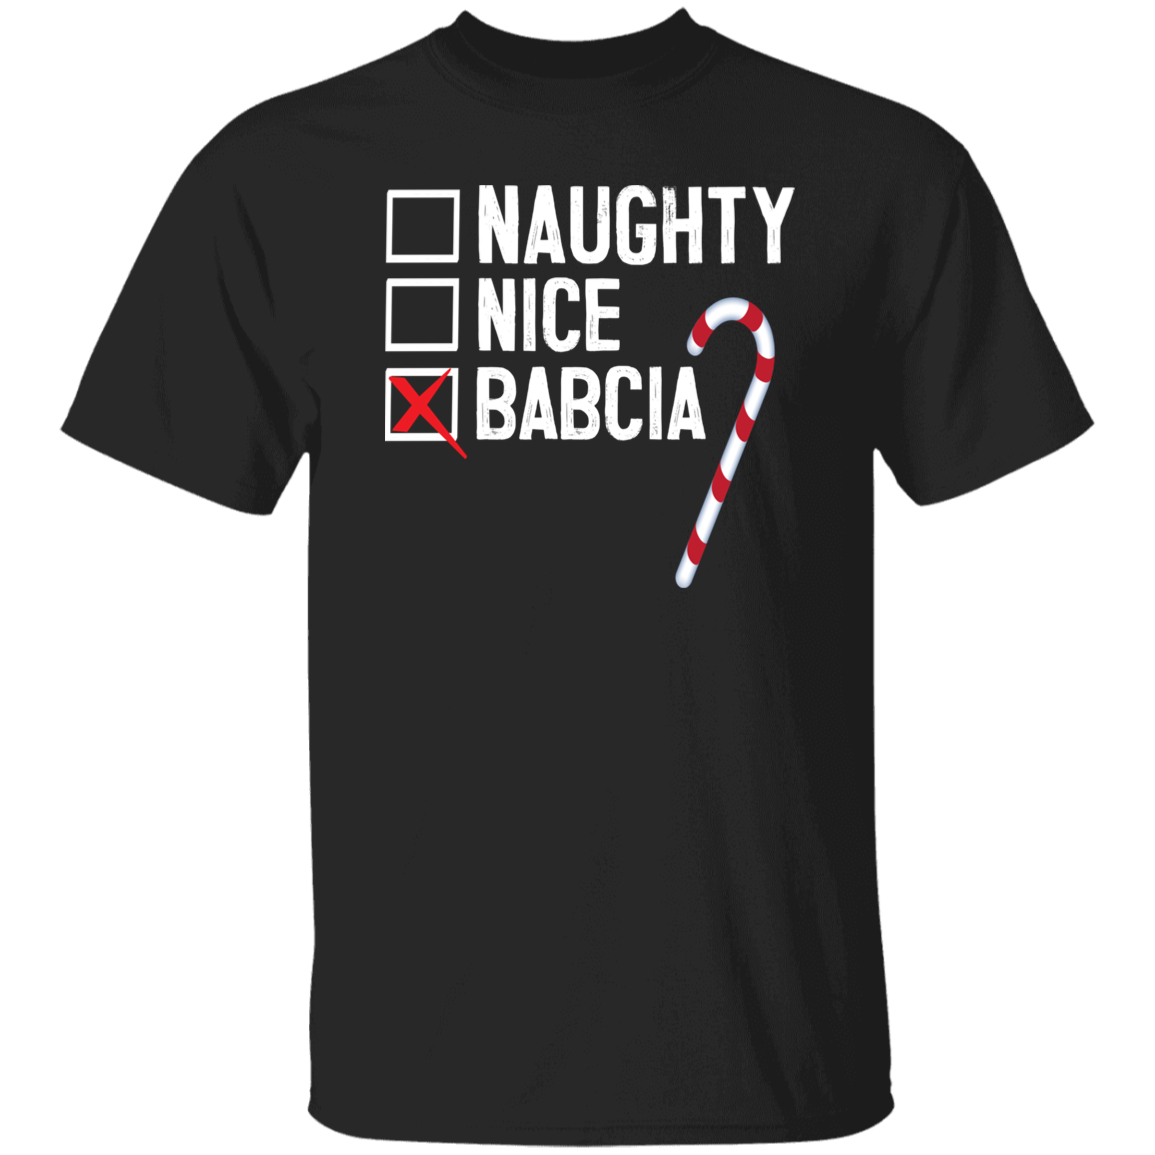 Babcia Naughty Or Nice List Apparel CustomCat G500 5.3 oz. T-Shirt Black S